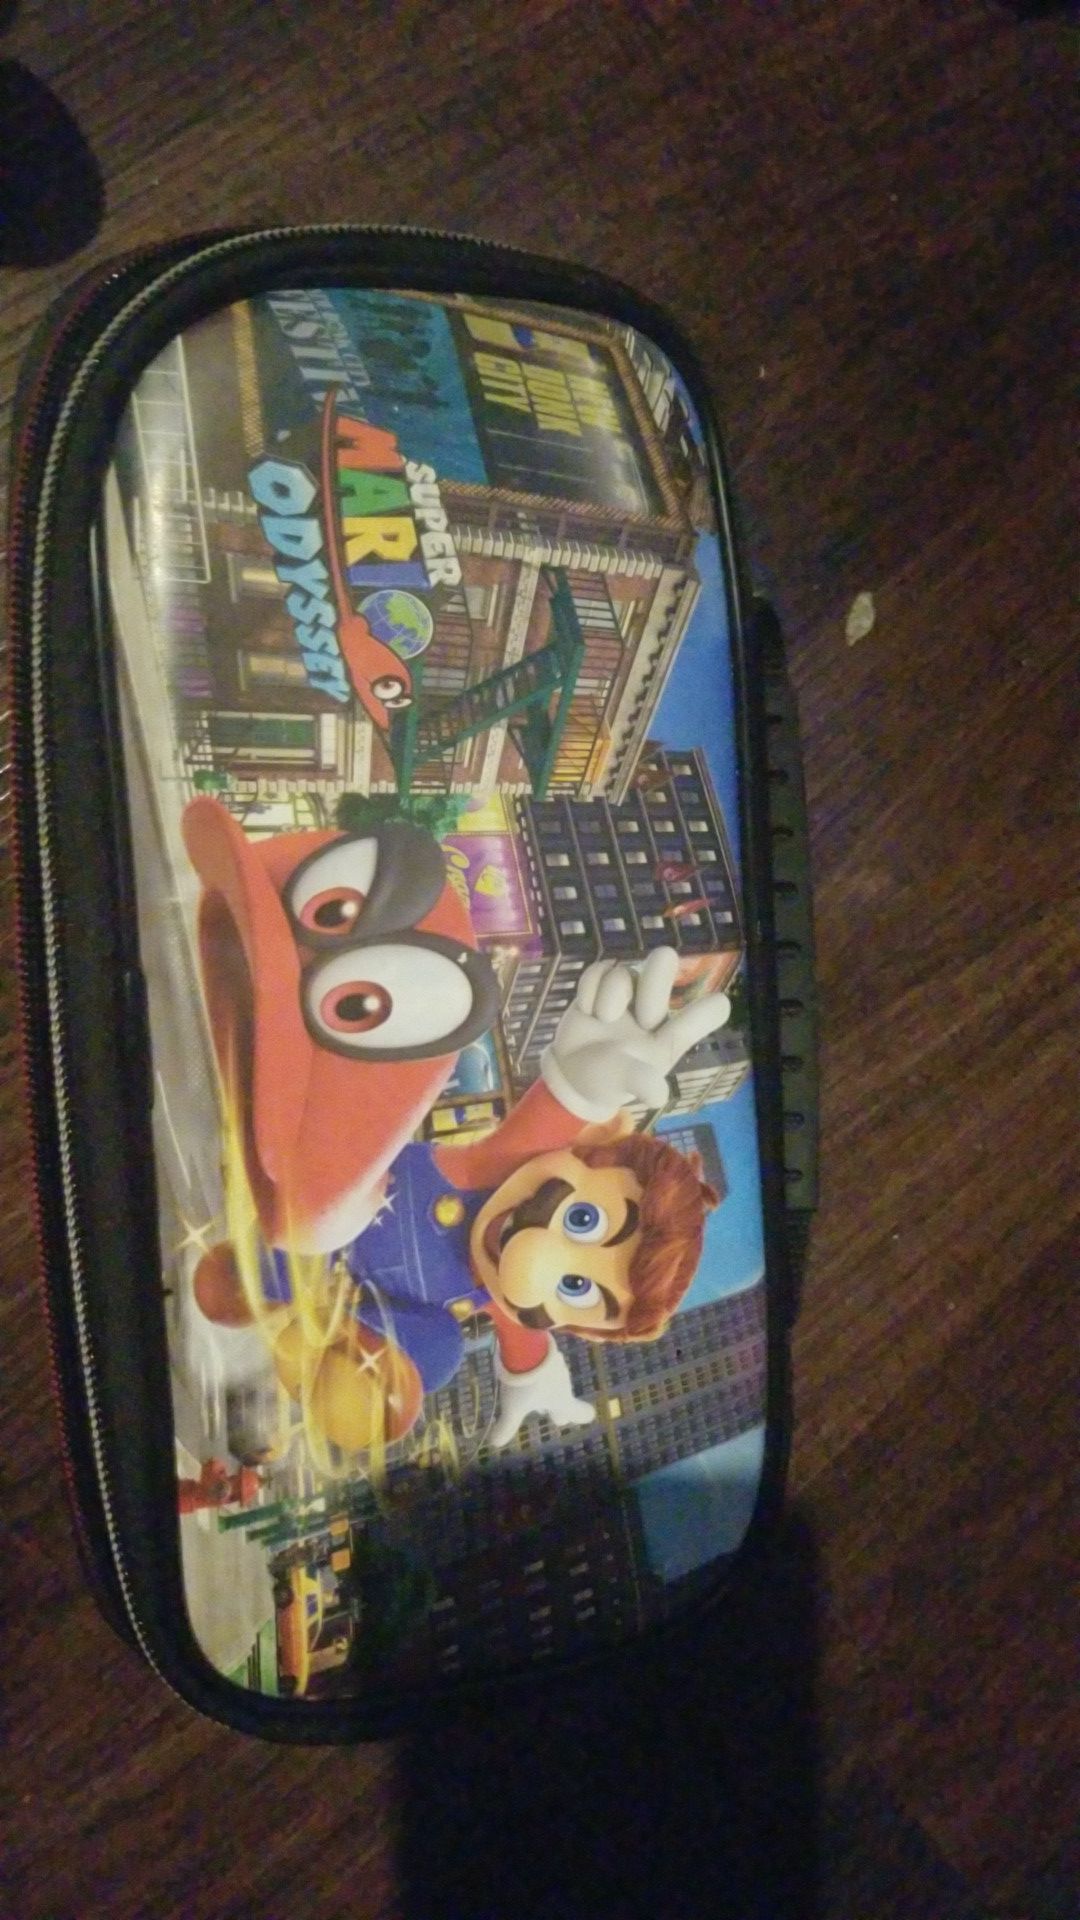 Nintendo switch case